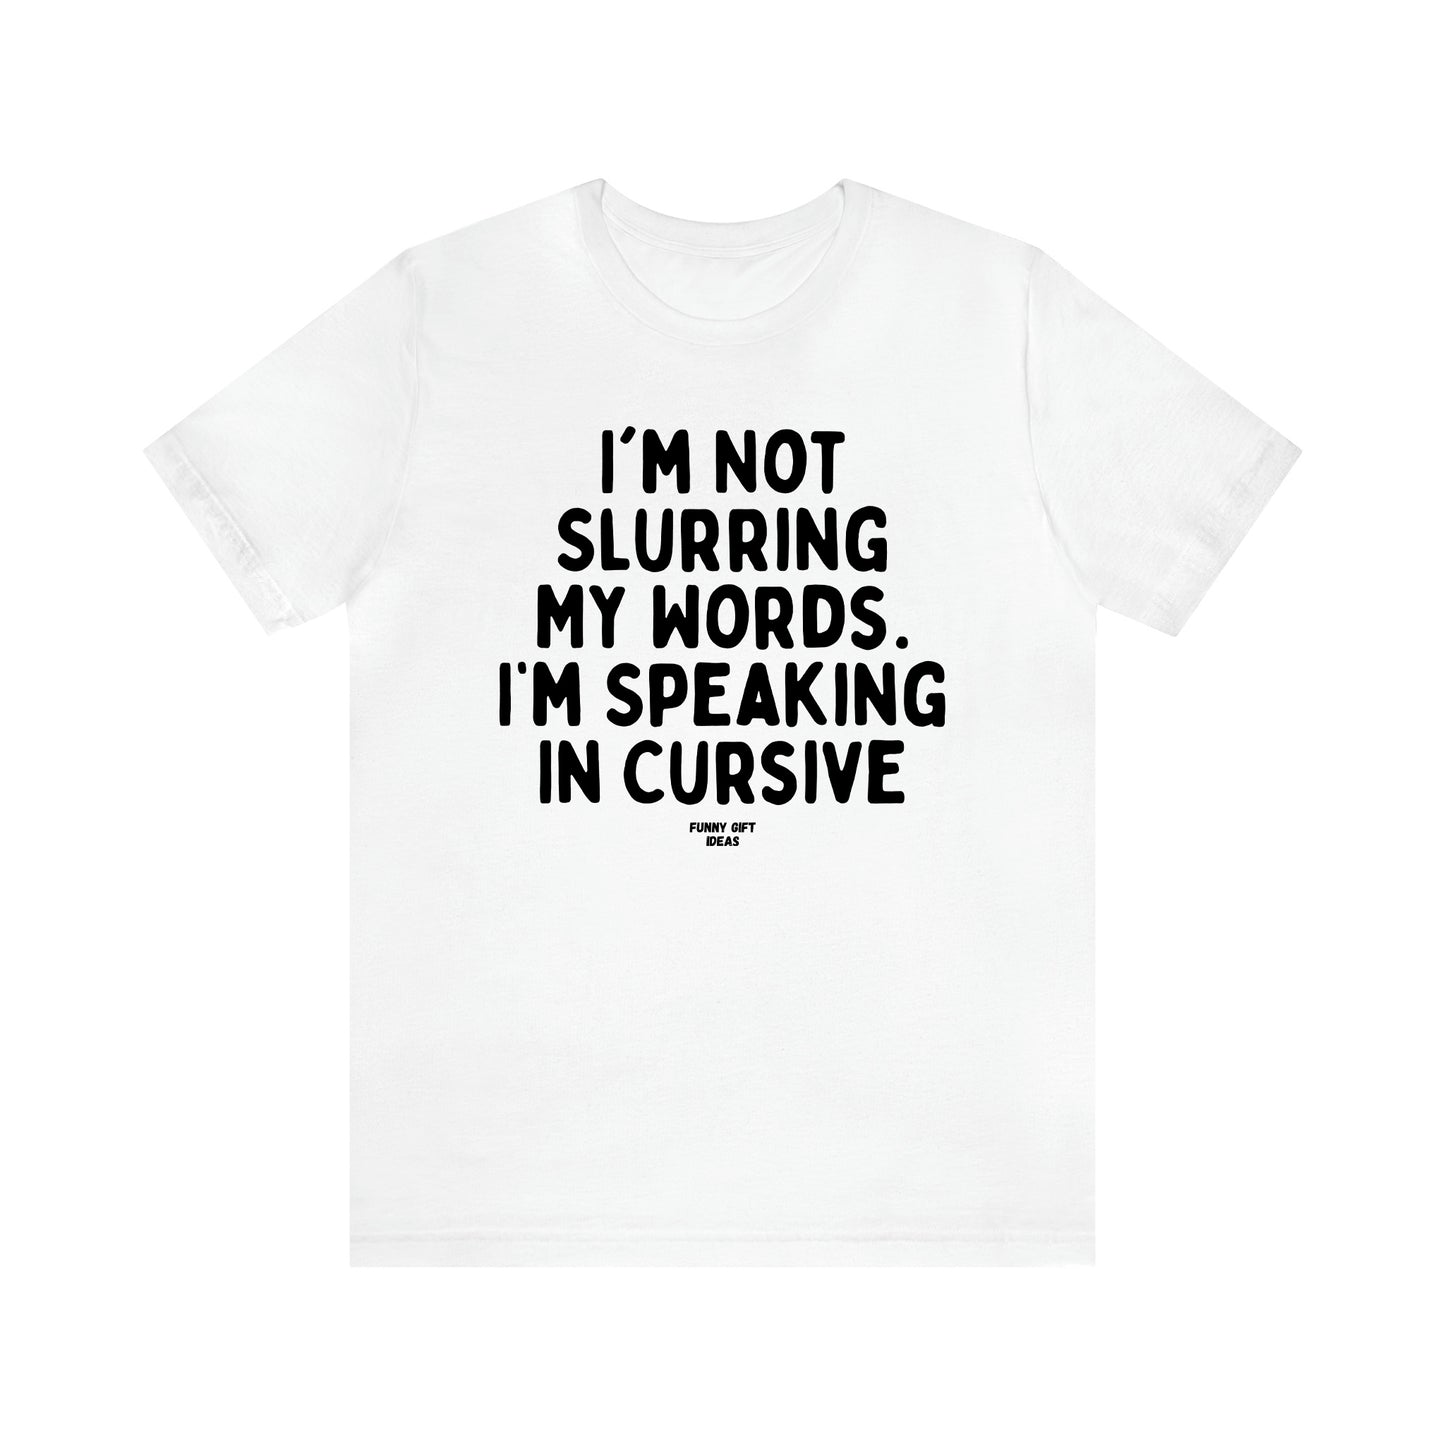 Women's T Shirts I'm Not Slurring My Words. I'm Speaking Cursive - Funny Gift Ideas